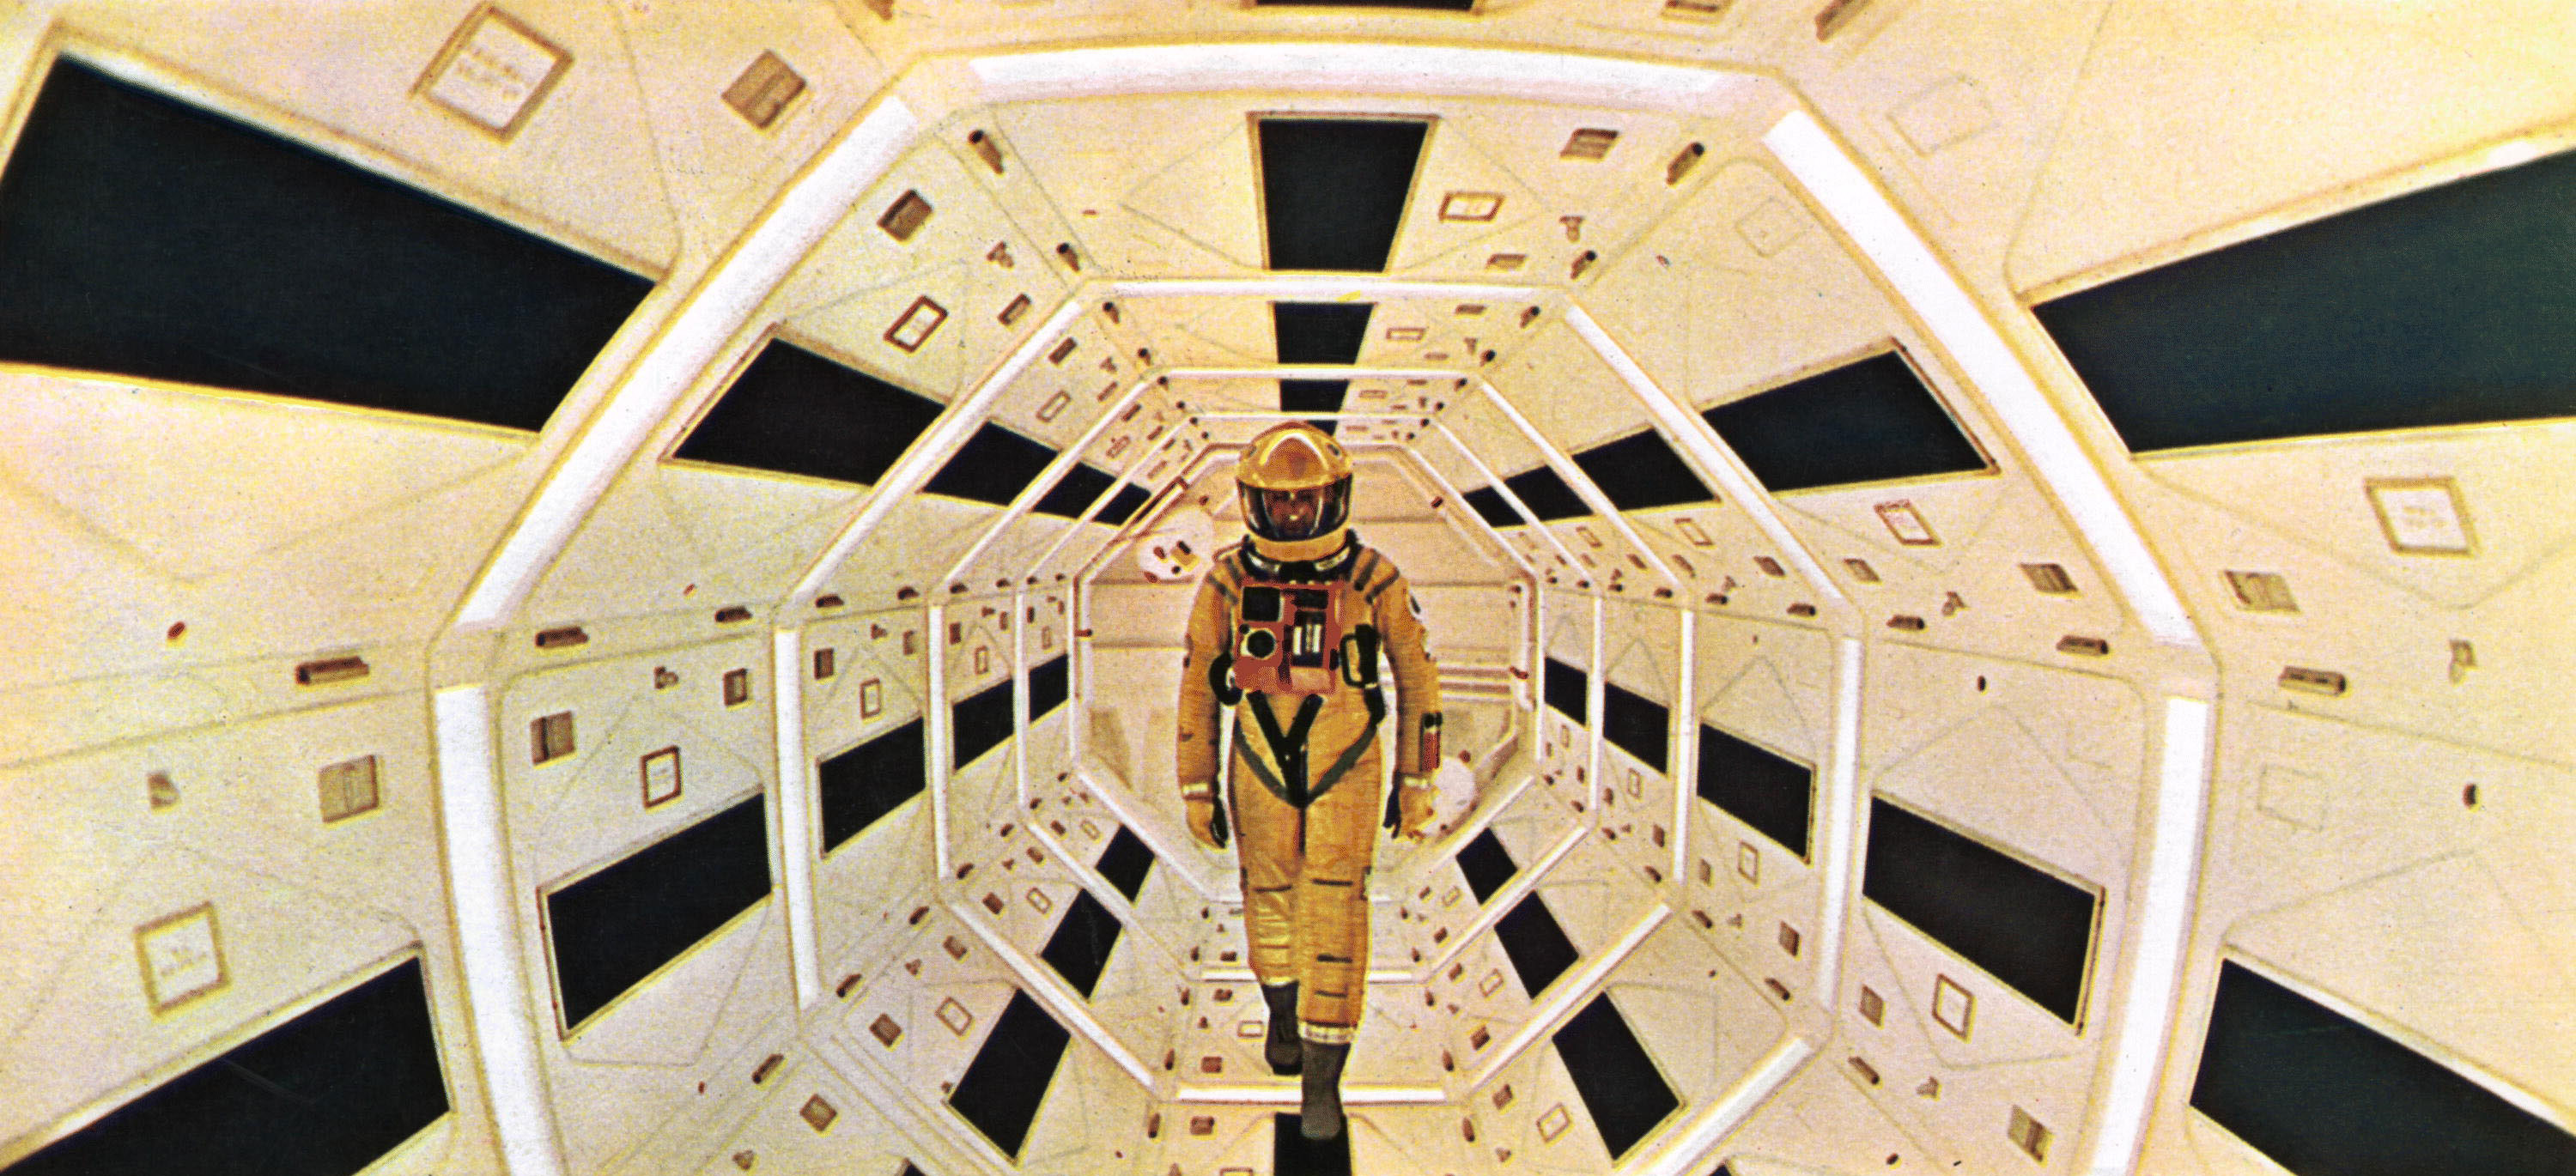 2001: A Space Odyssey - desktop wallpaper